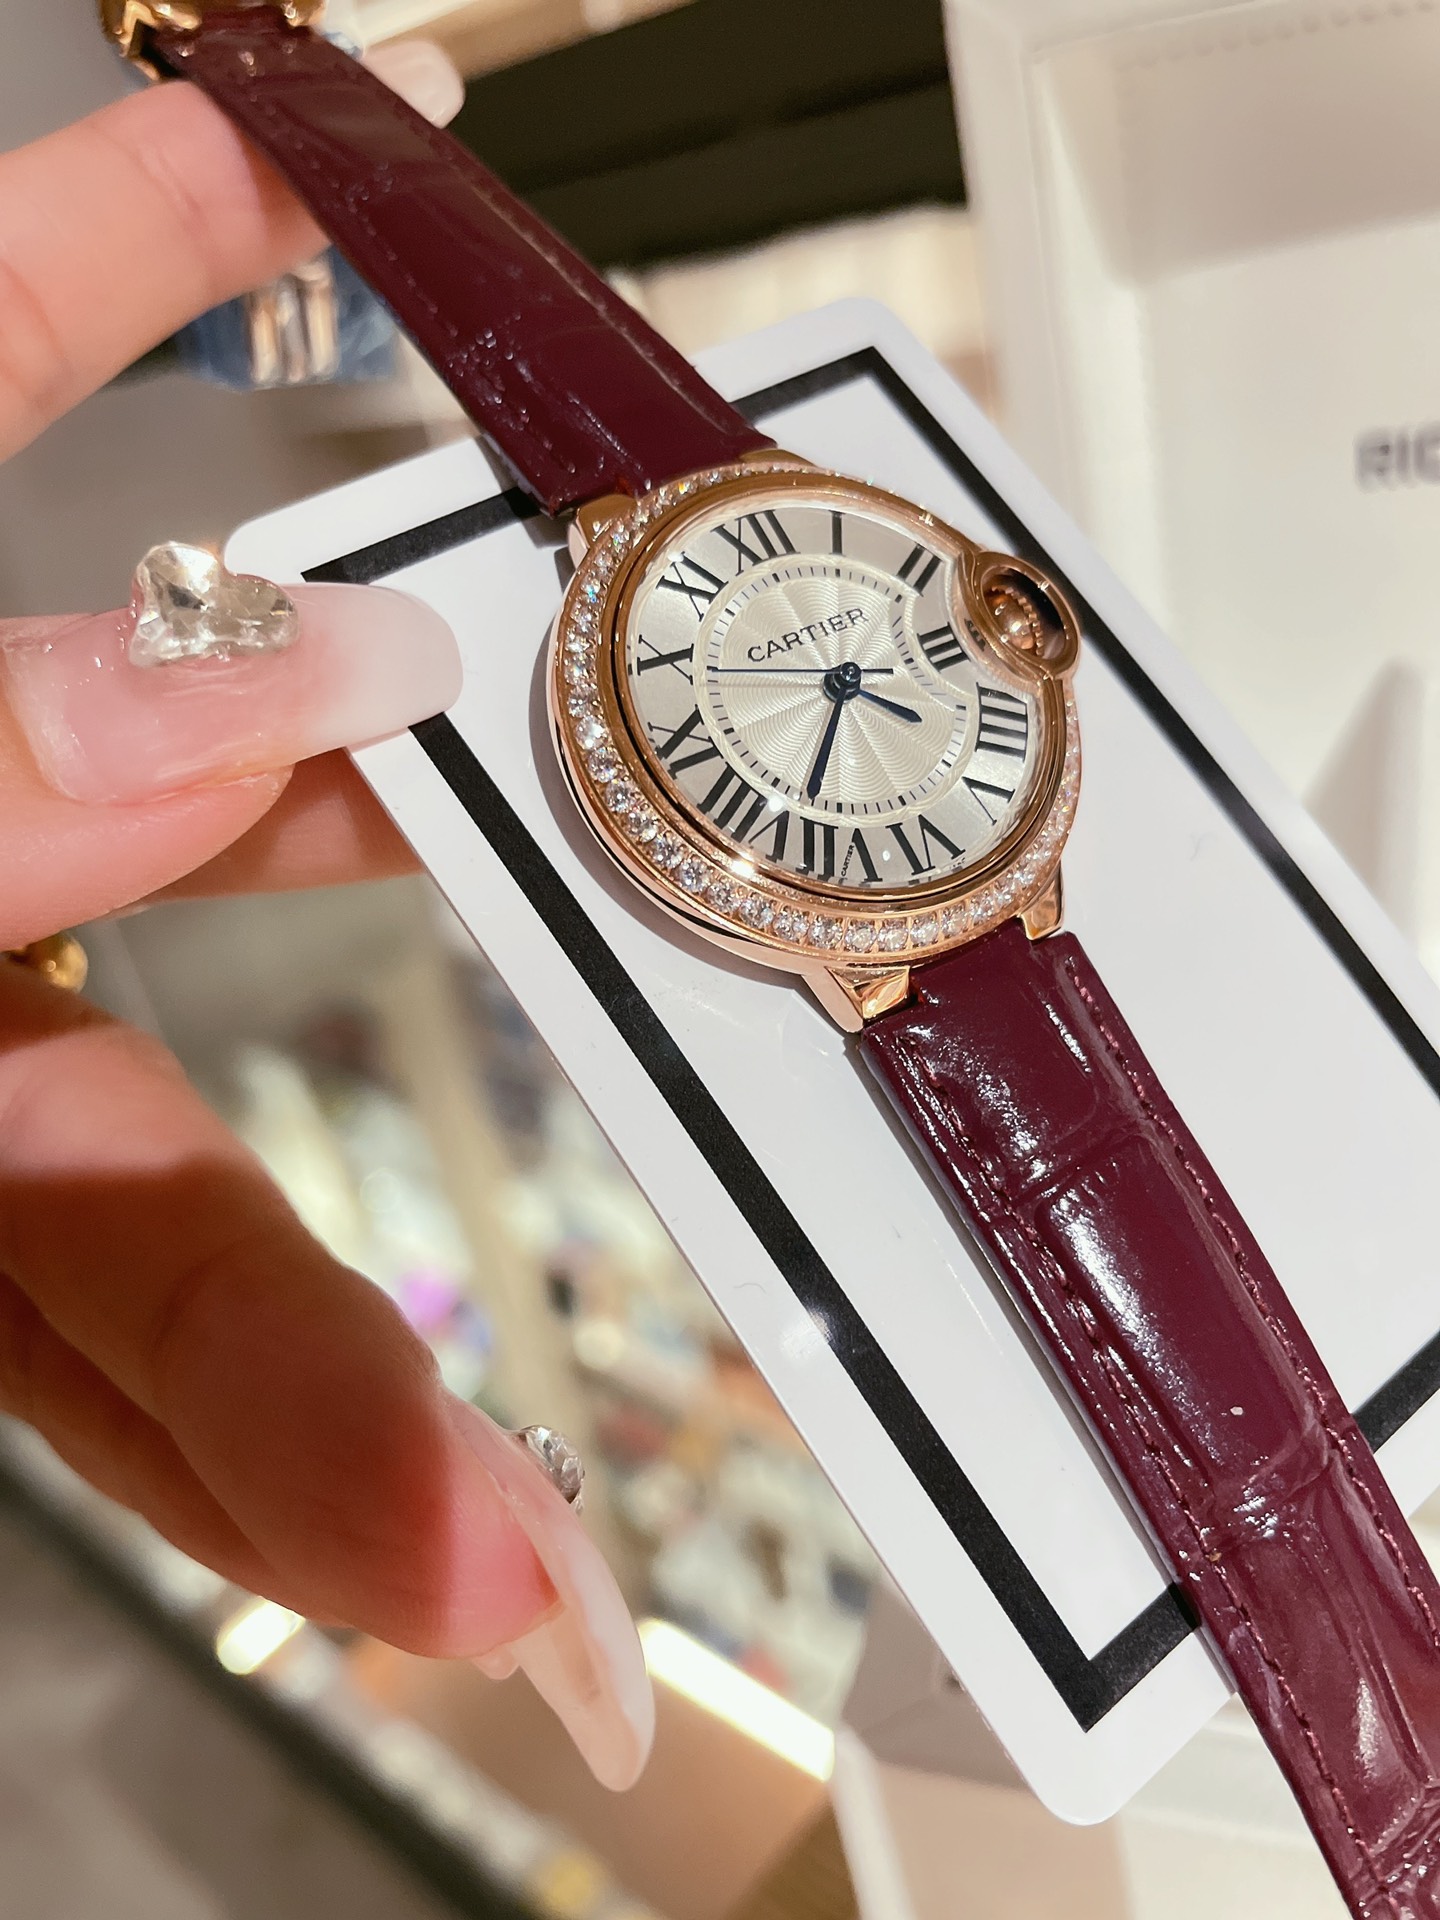 CARTIERカルティエ マレーシアｎ級品 フランス 薄い腕時計 丸い形 レザー 新商品 限定品 レッド_7